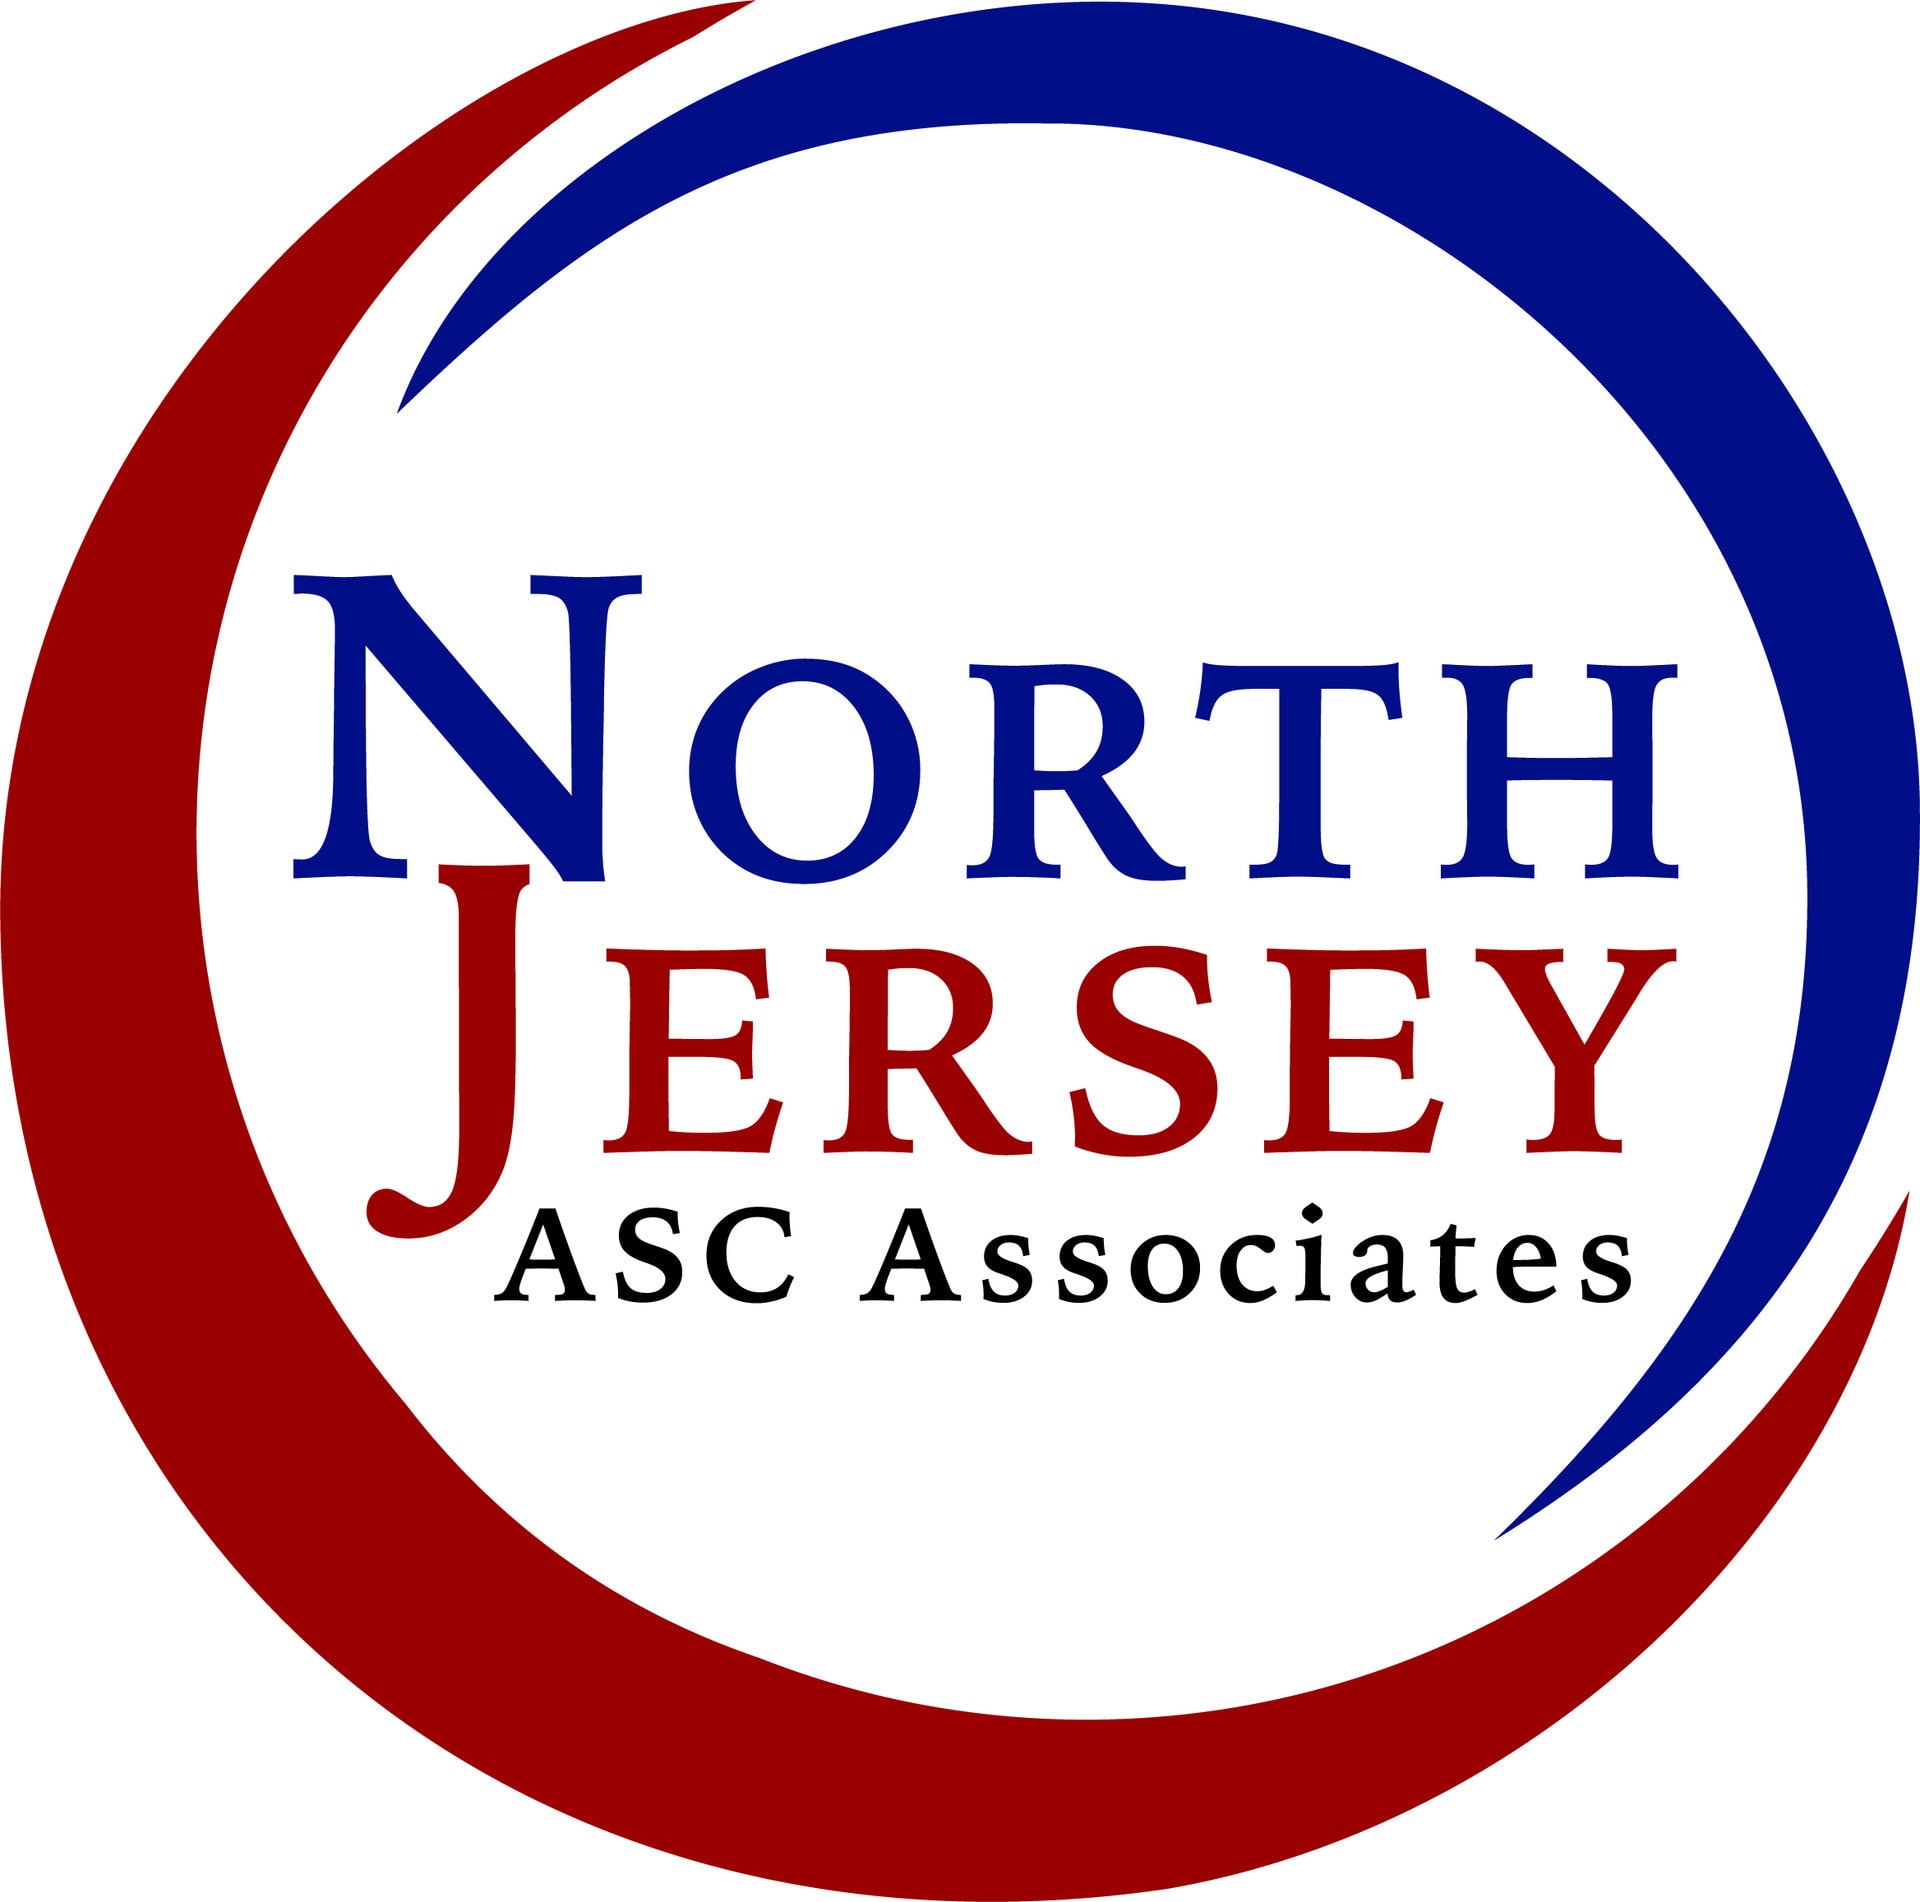 North Jersey ASC Associates